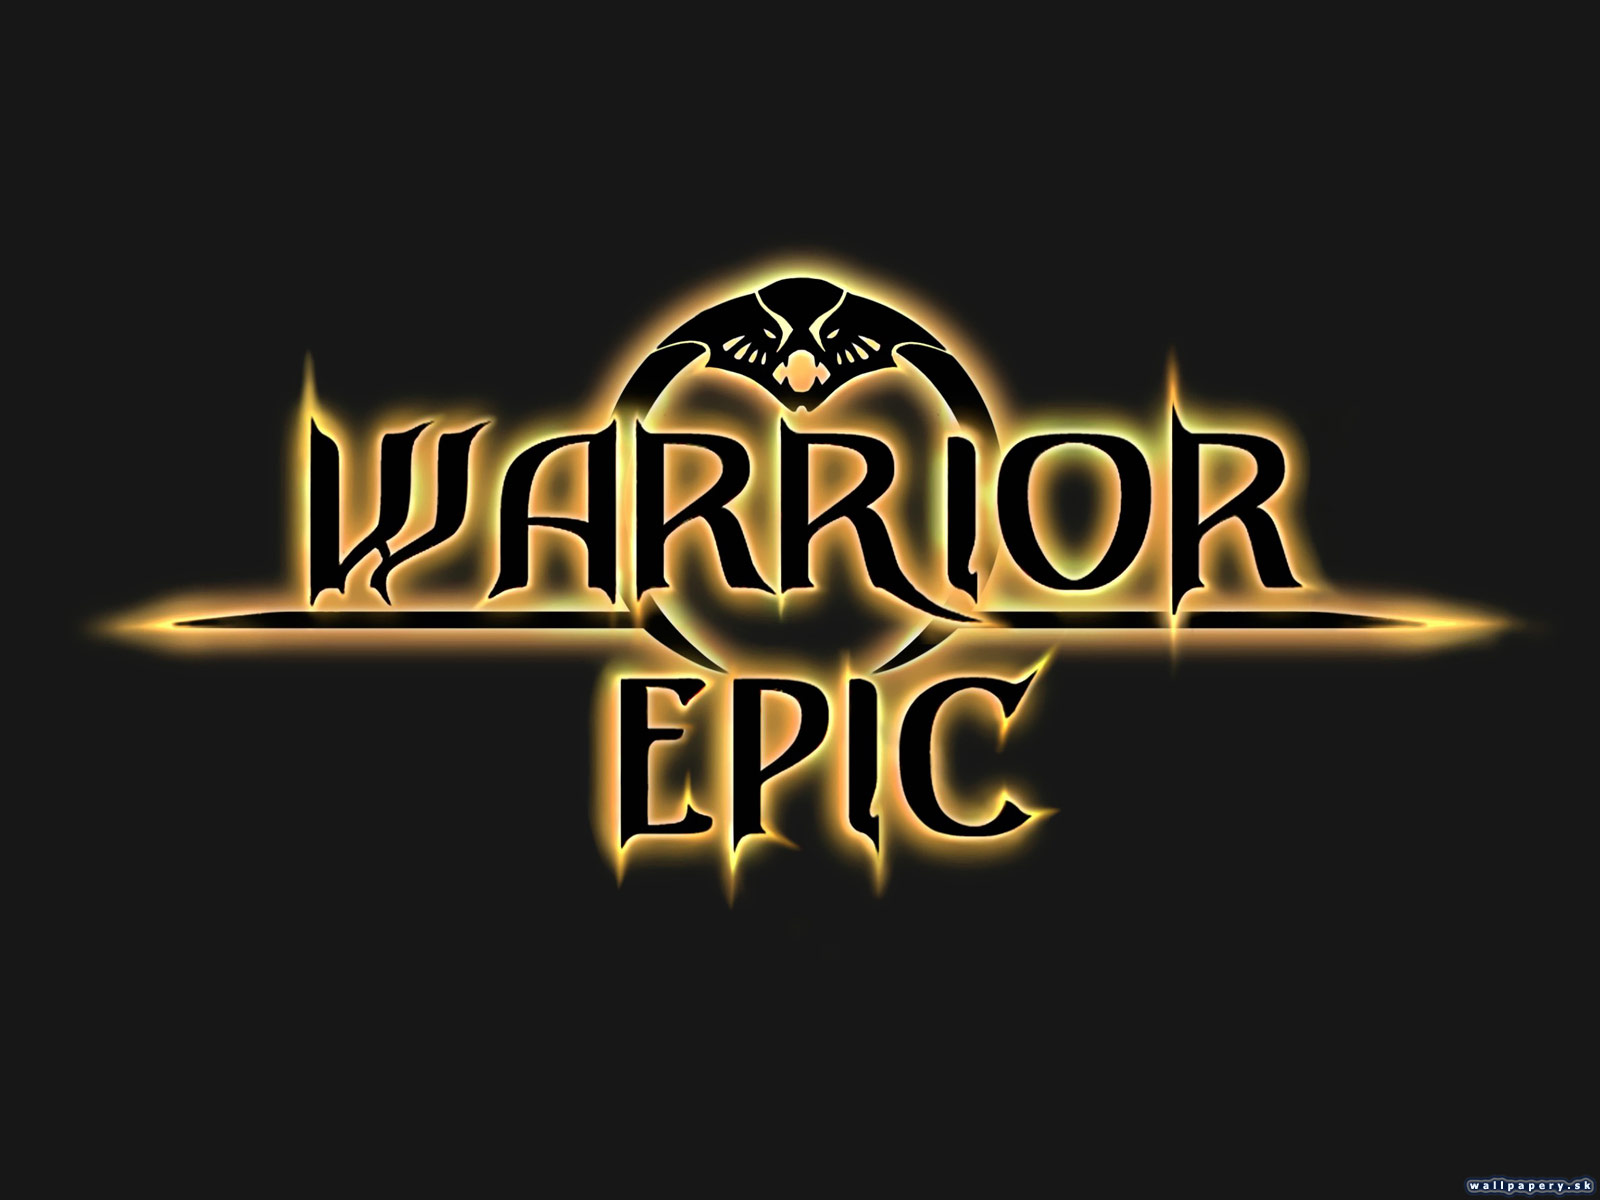 Warrior Epic - wallpaper 10